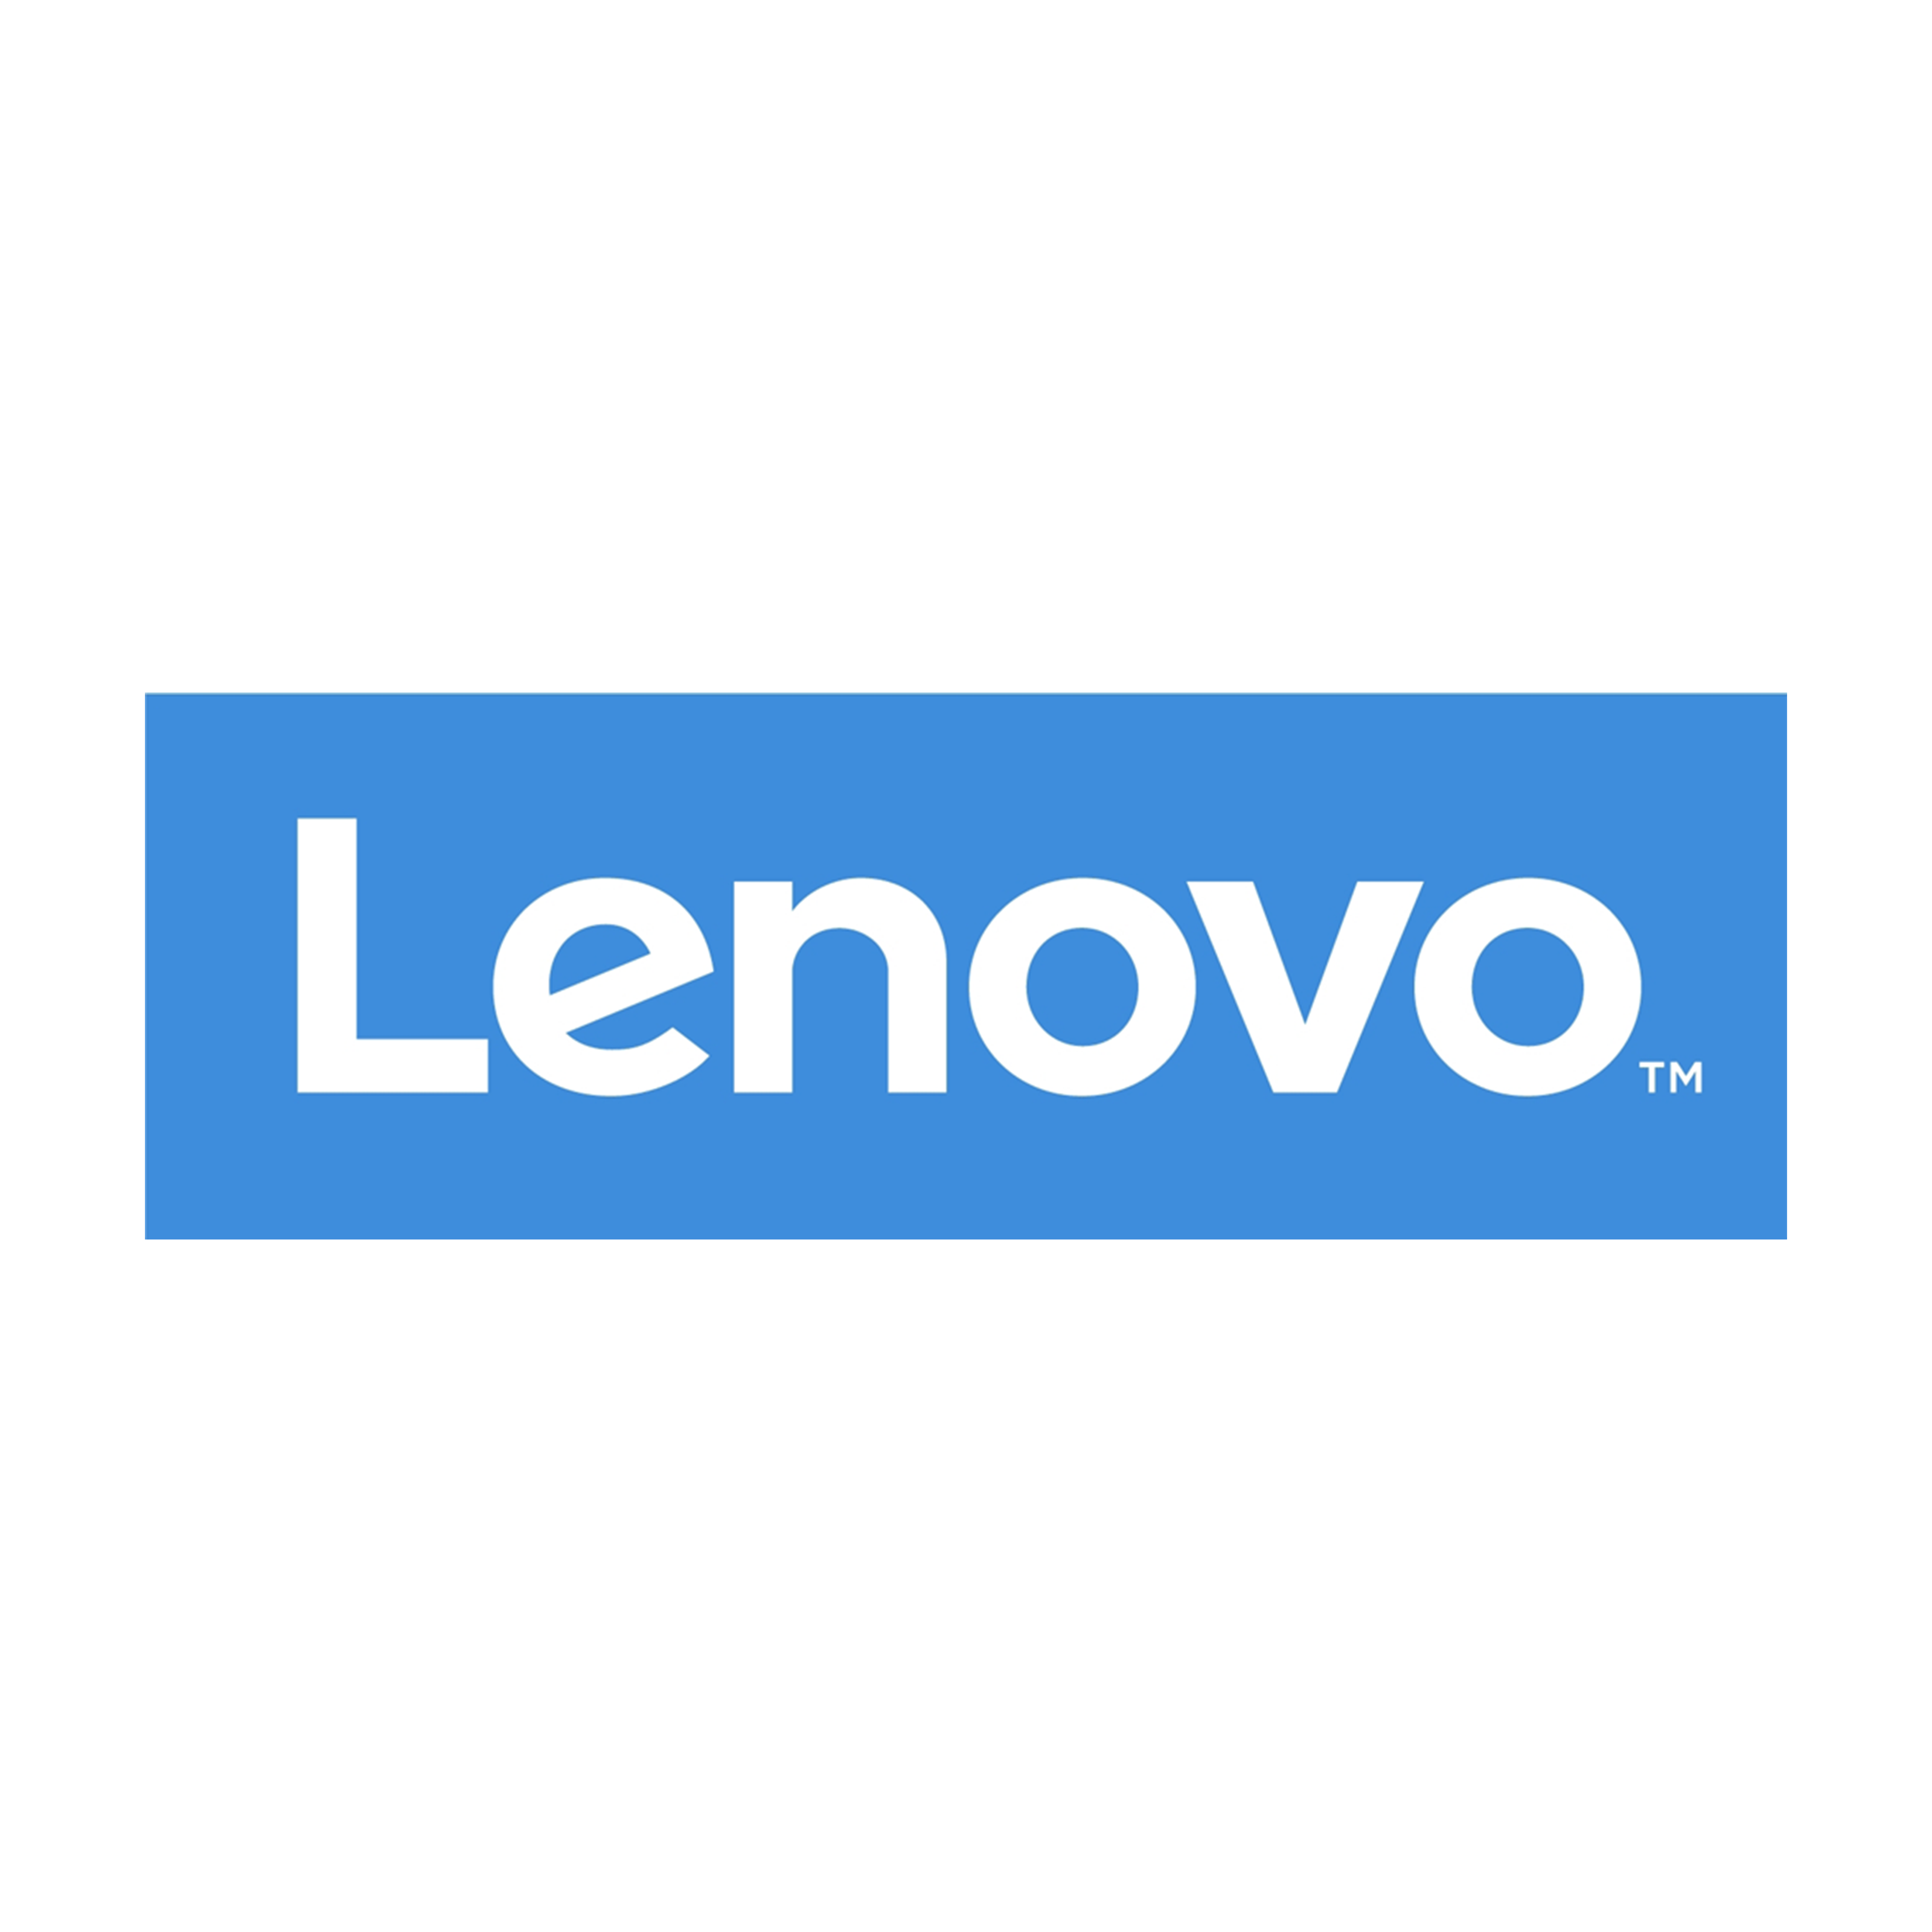 Lenovo Background PNG Image